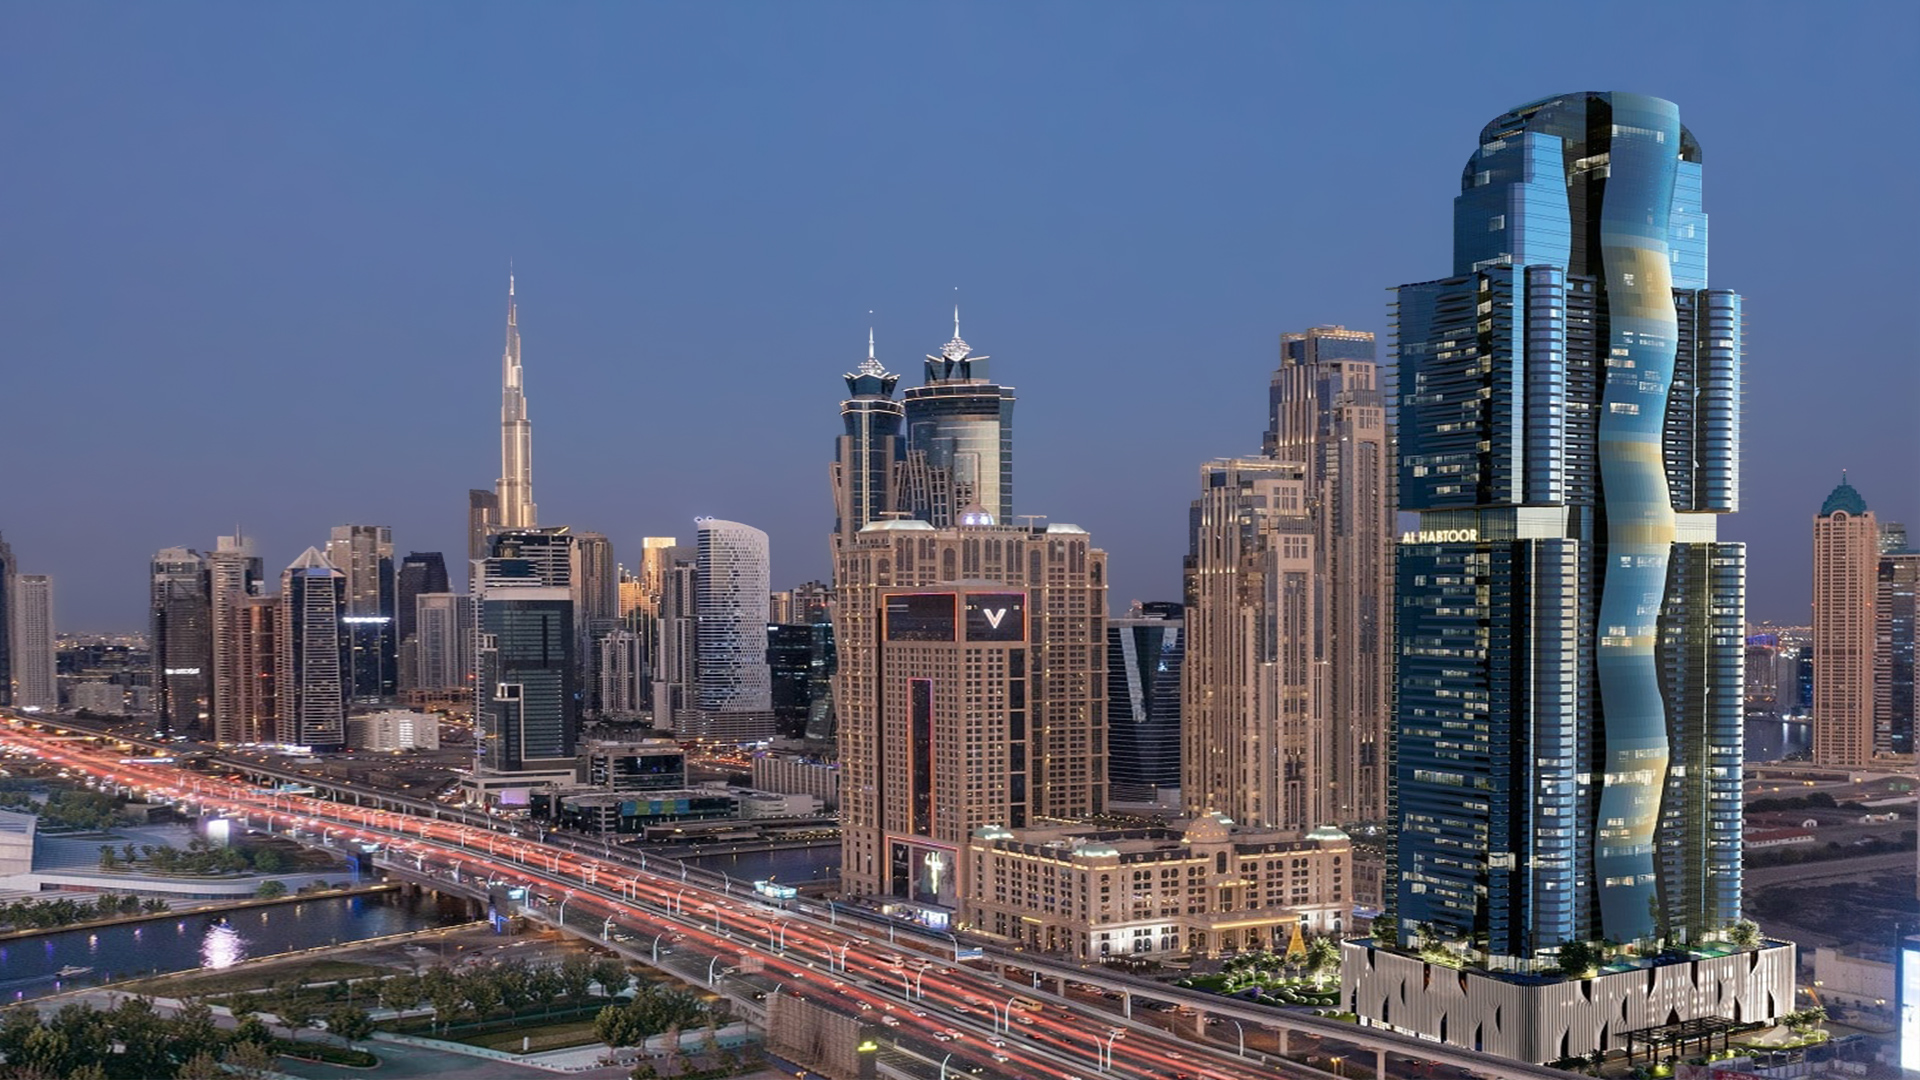 Al Habtoor Tower at Sheik Zayed Road, Dubai.